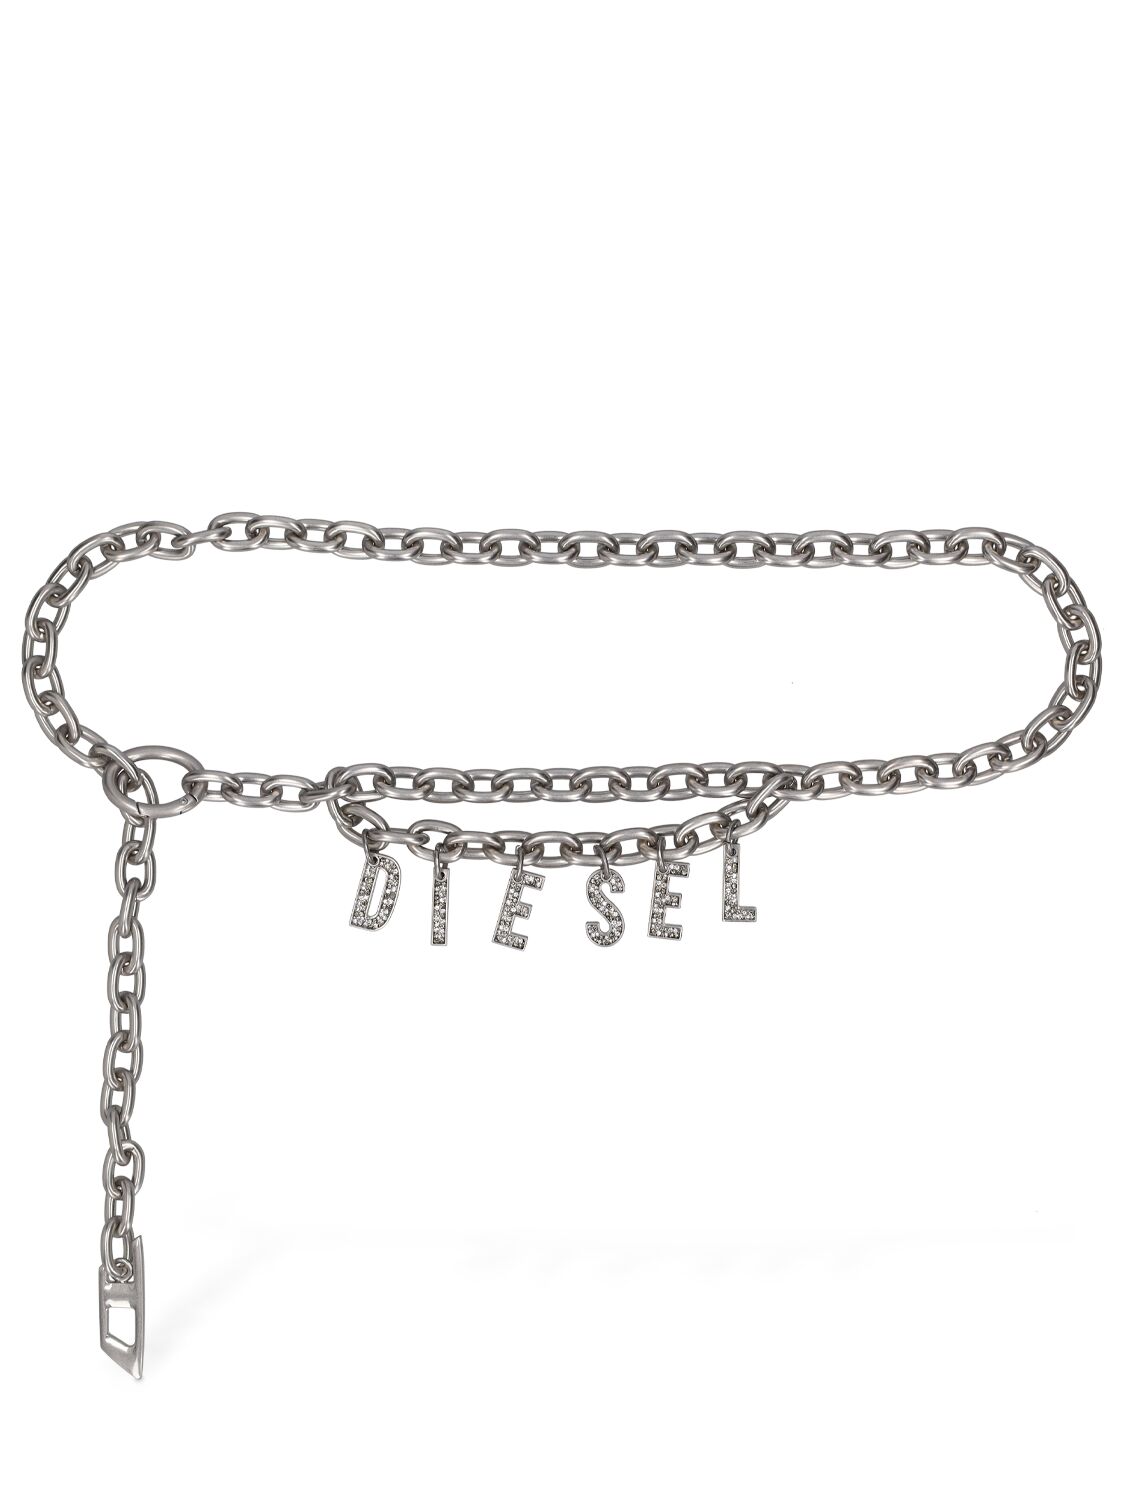 Diesel B-charm Embellished Metallic Belt In Silver